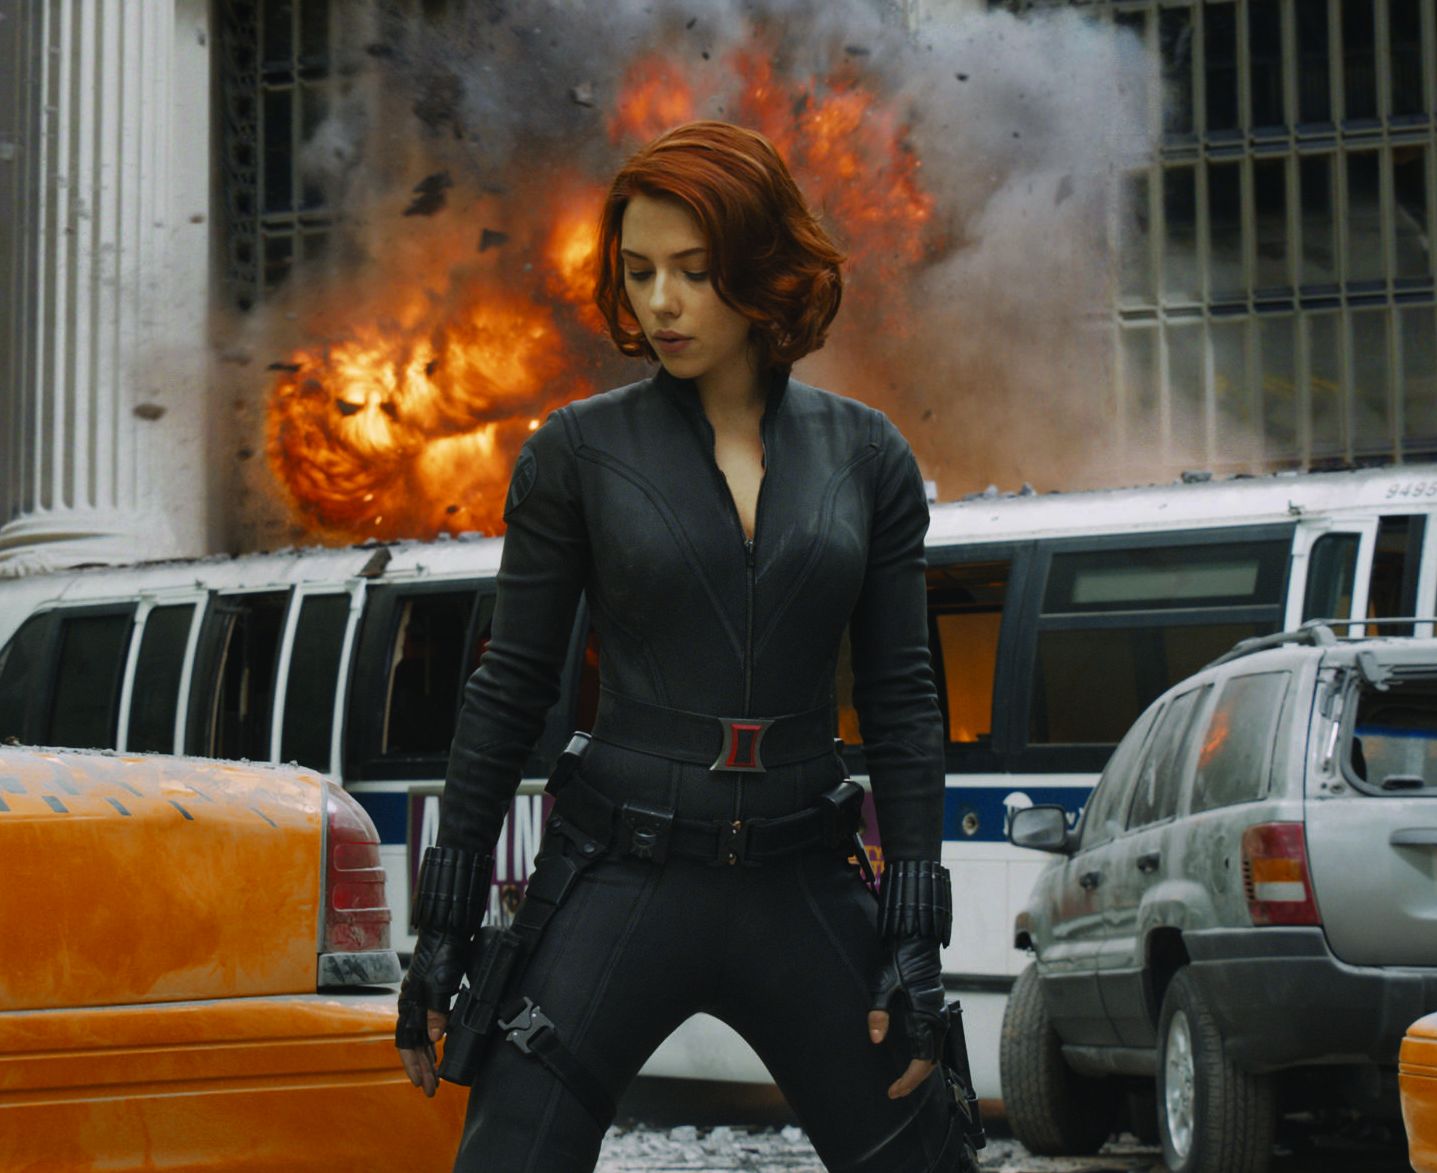 Scarlett Johansson as Black Widow and big fire on the street